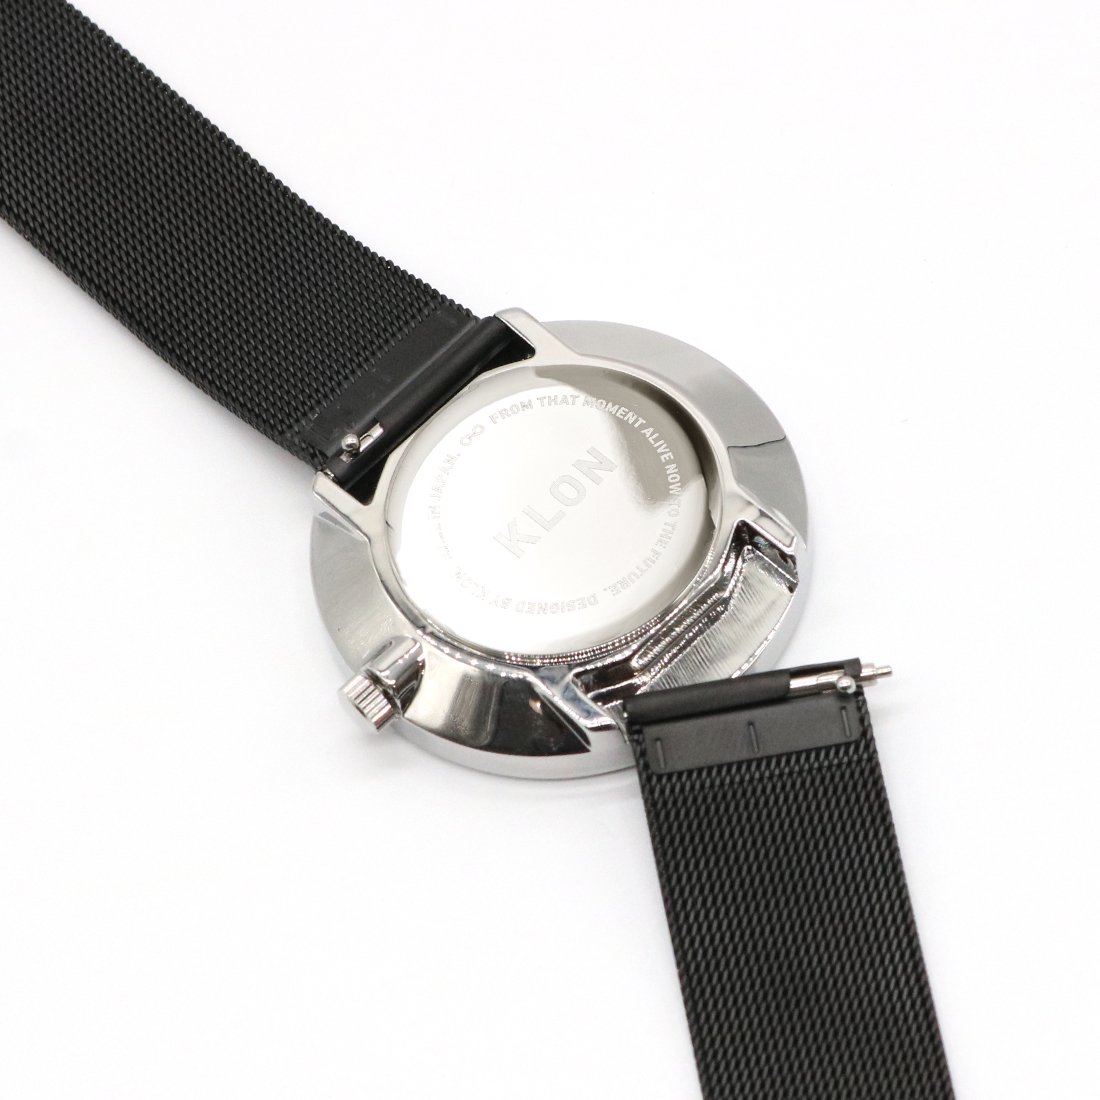 KLON WATCH REPLACEMENT STRAP -BLACK MESH- 18mm カジュアル 腕時計